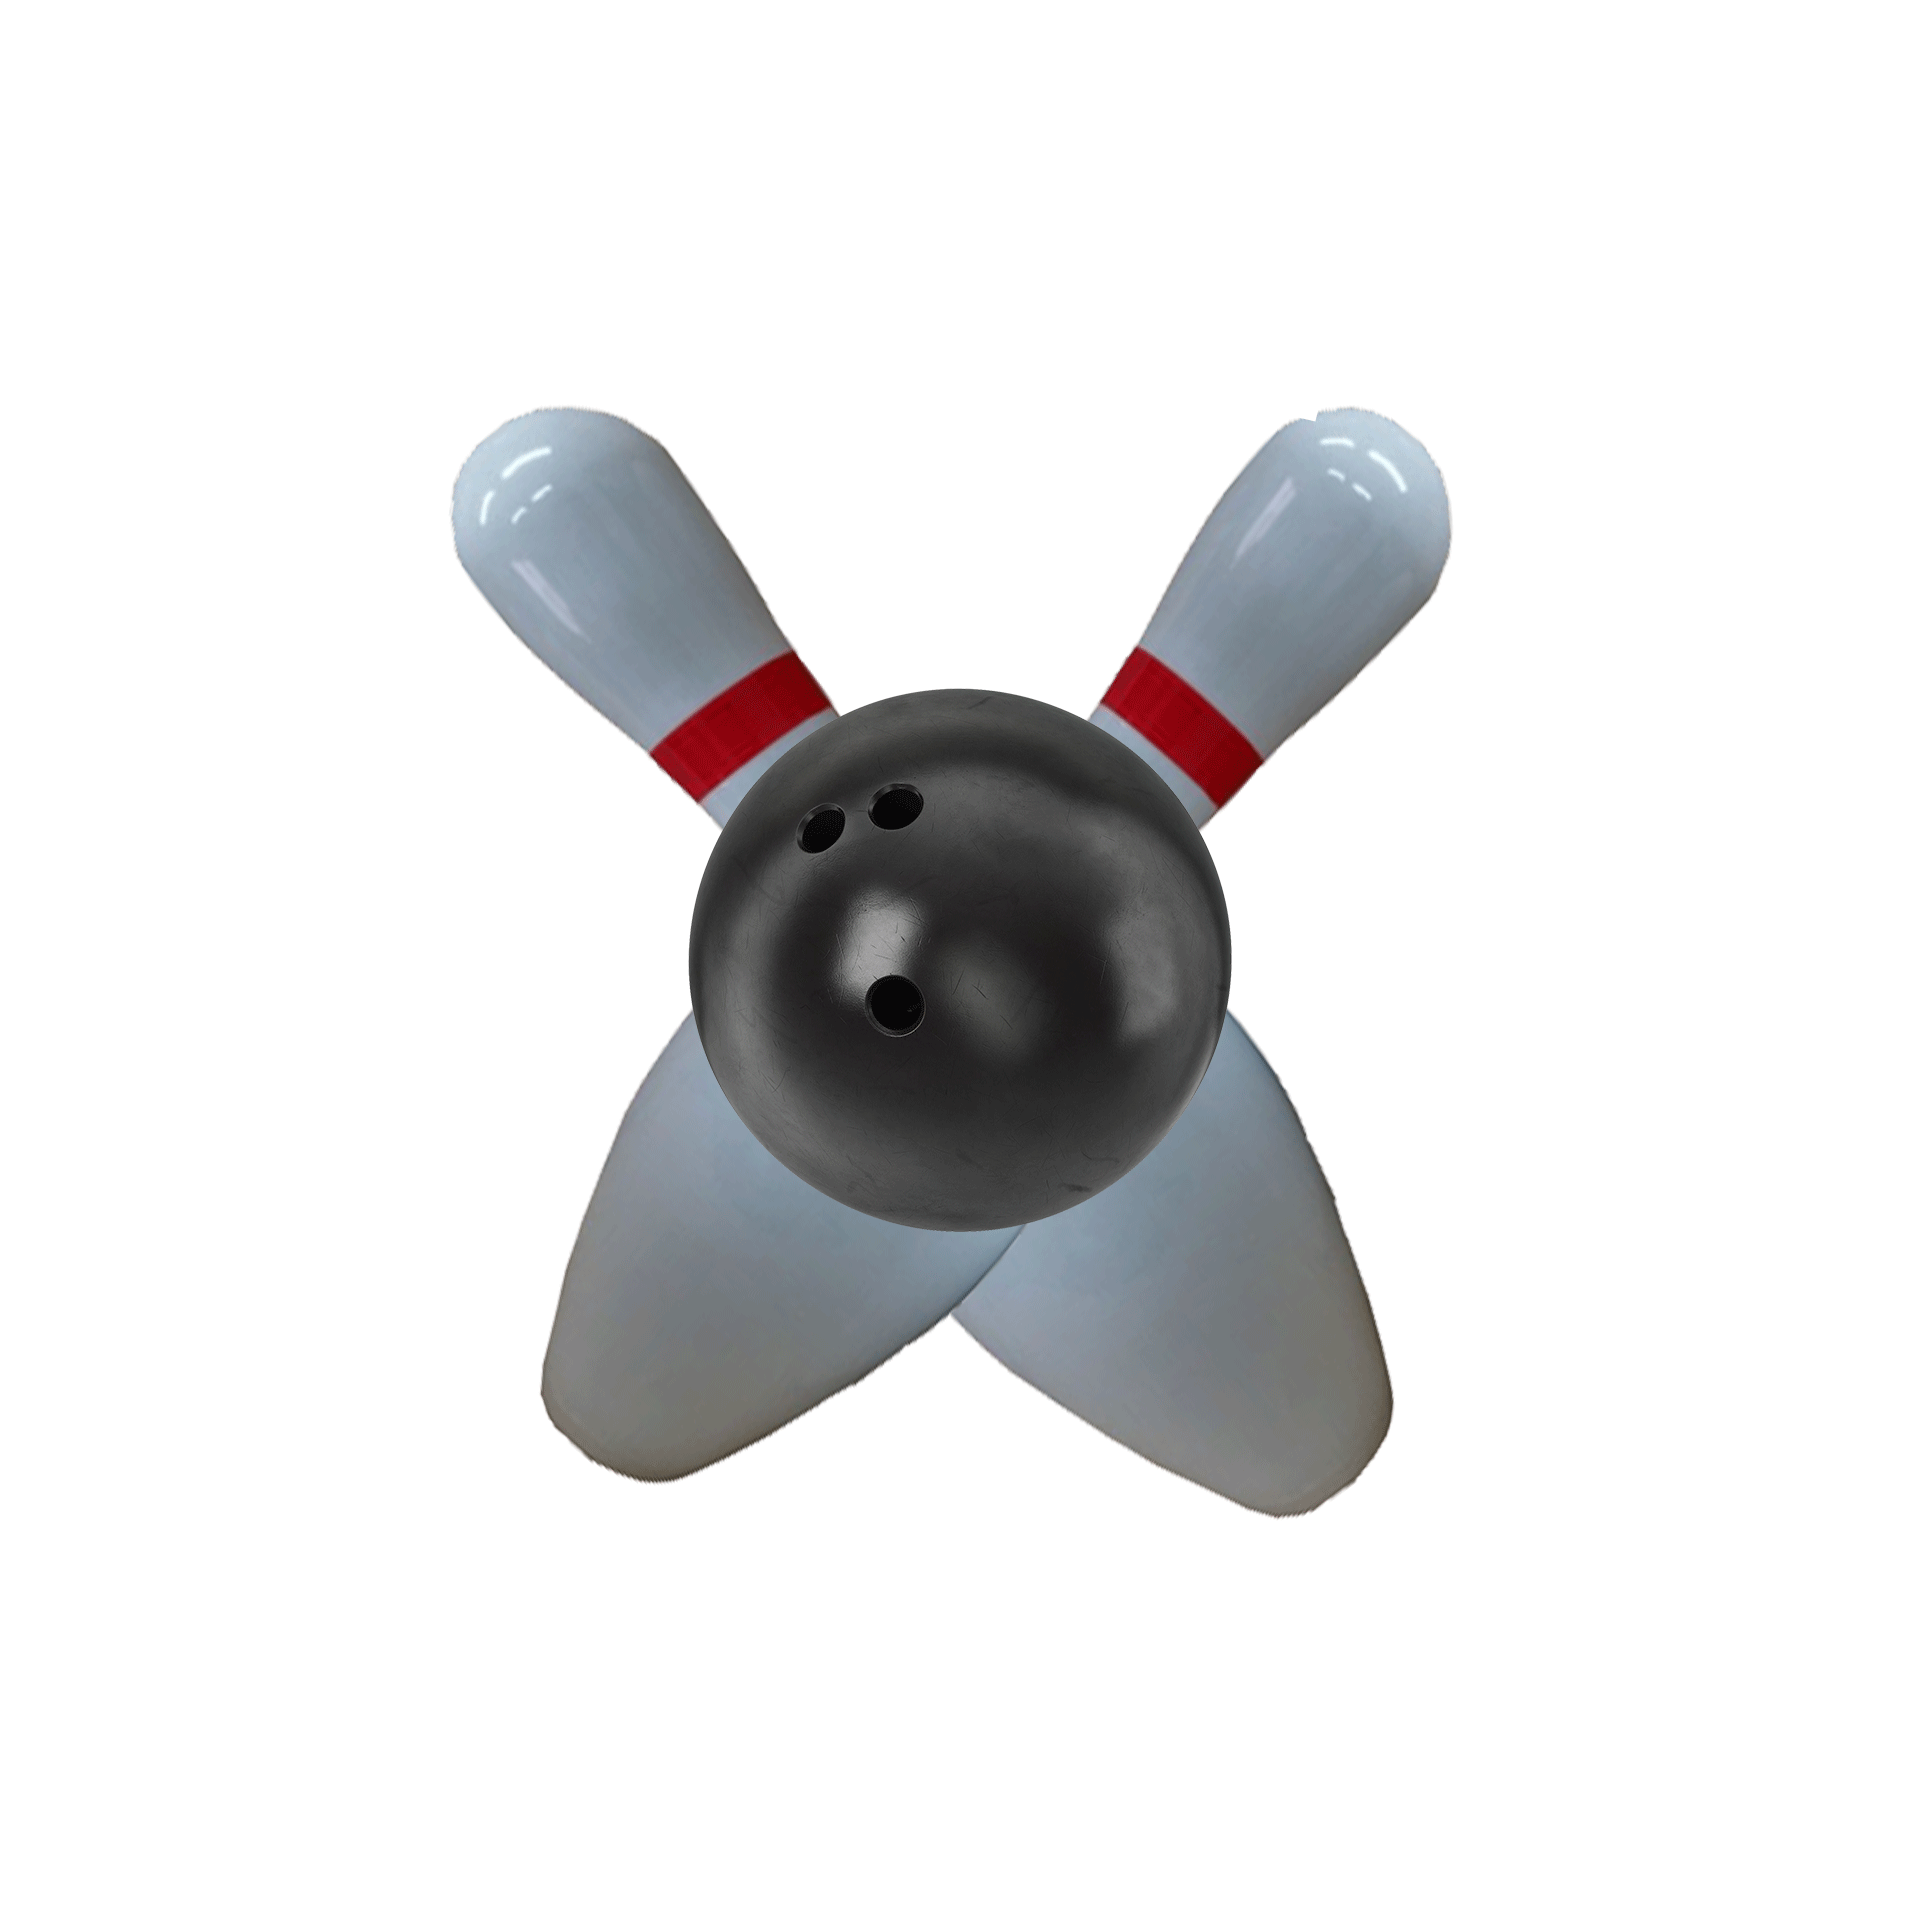 BK Strikers Klippan